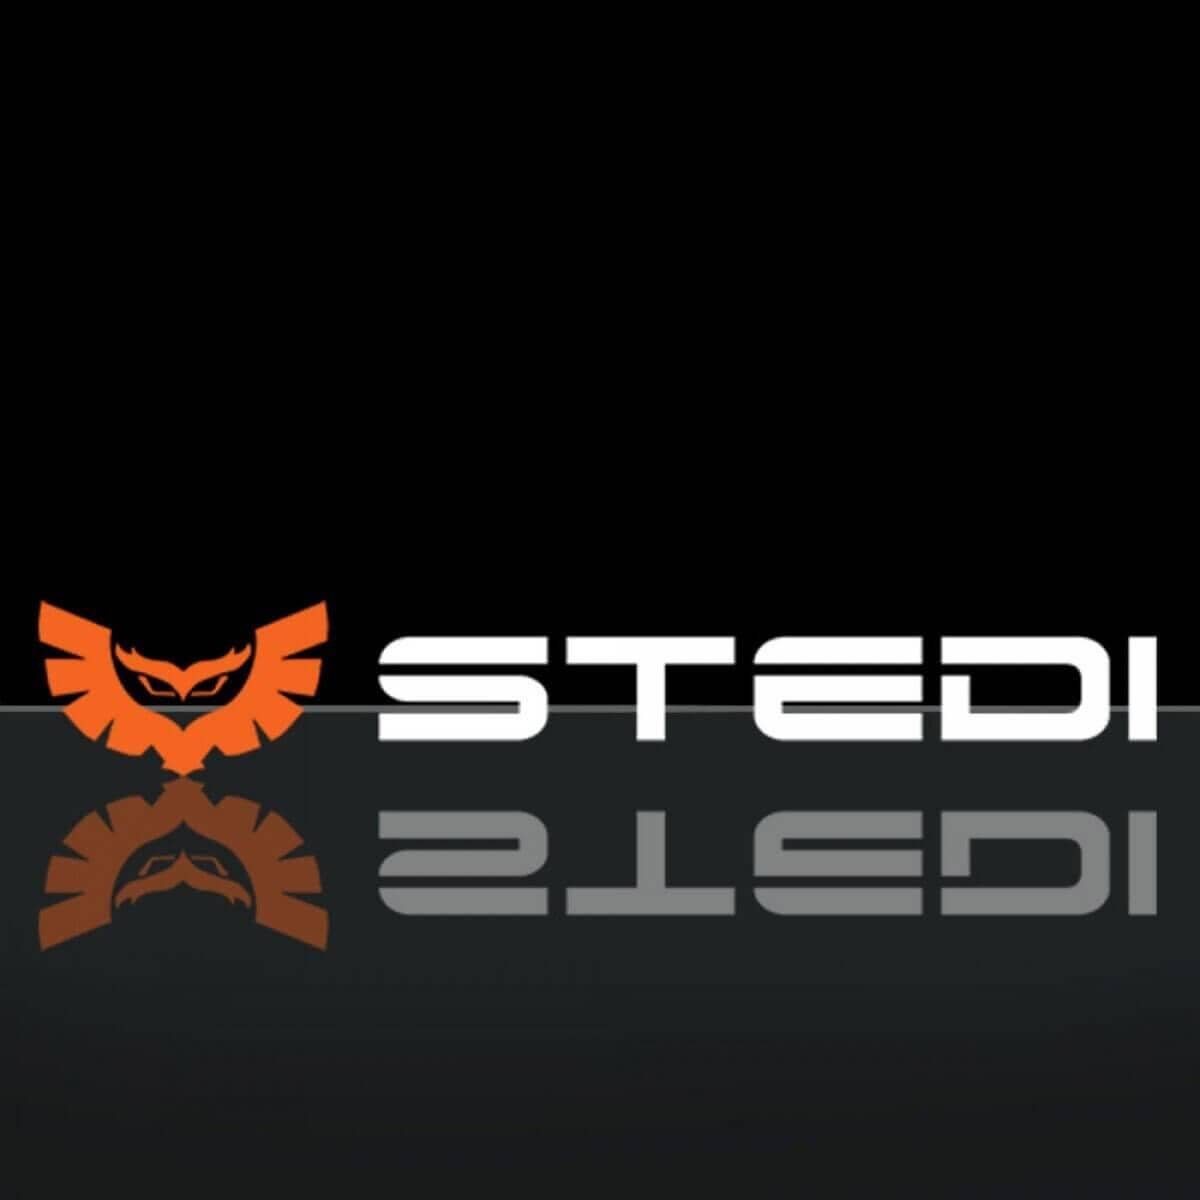 STEDI Banner Sticker 530mm X 80mm - NZ Offroader